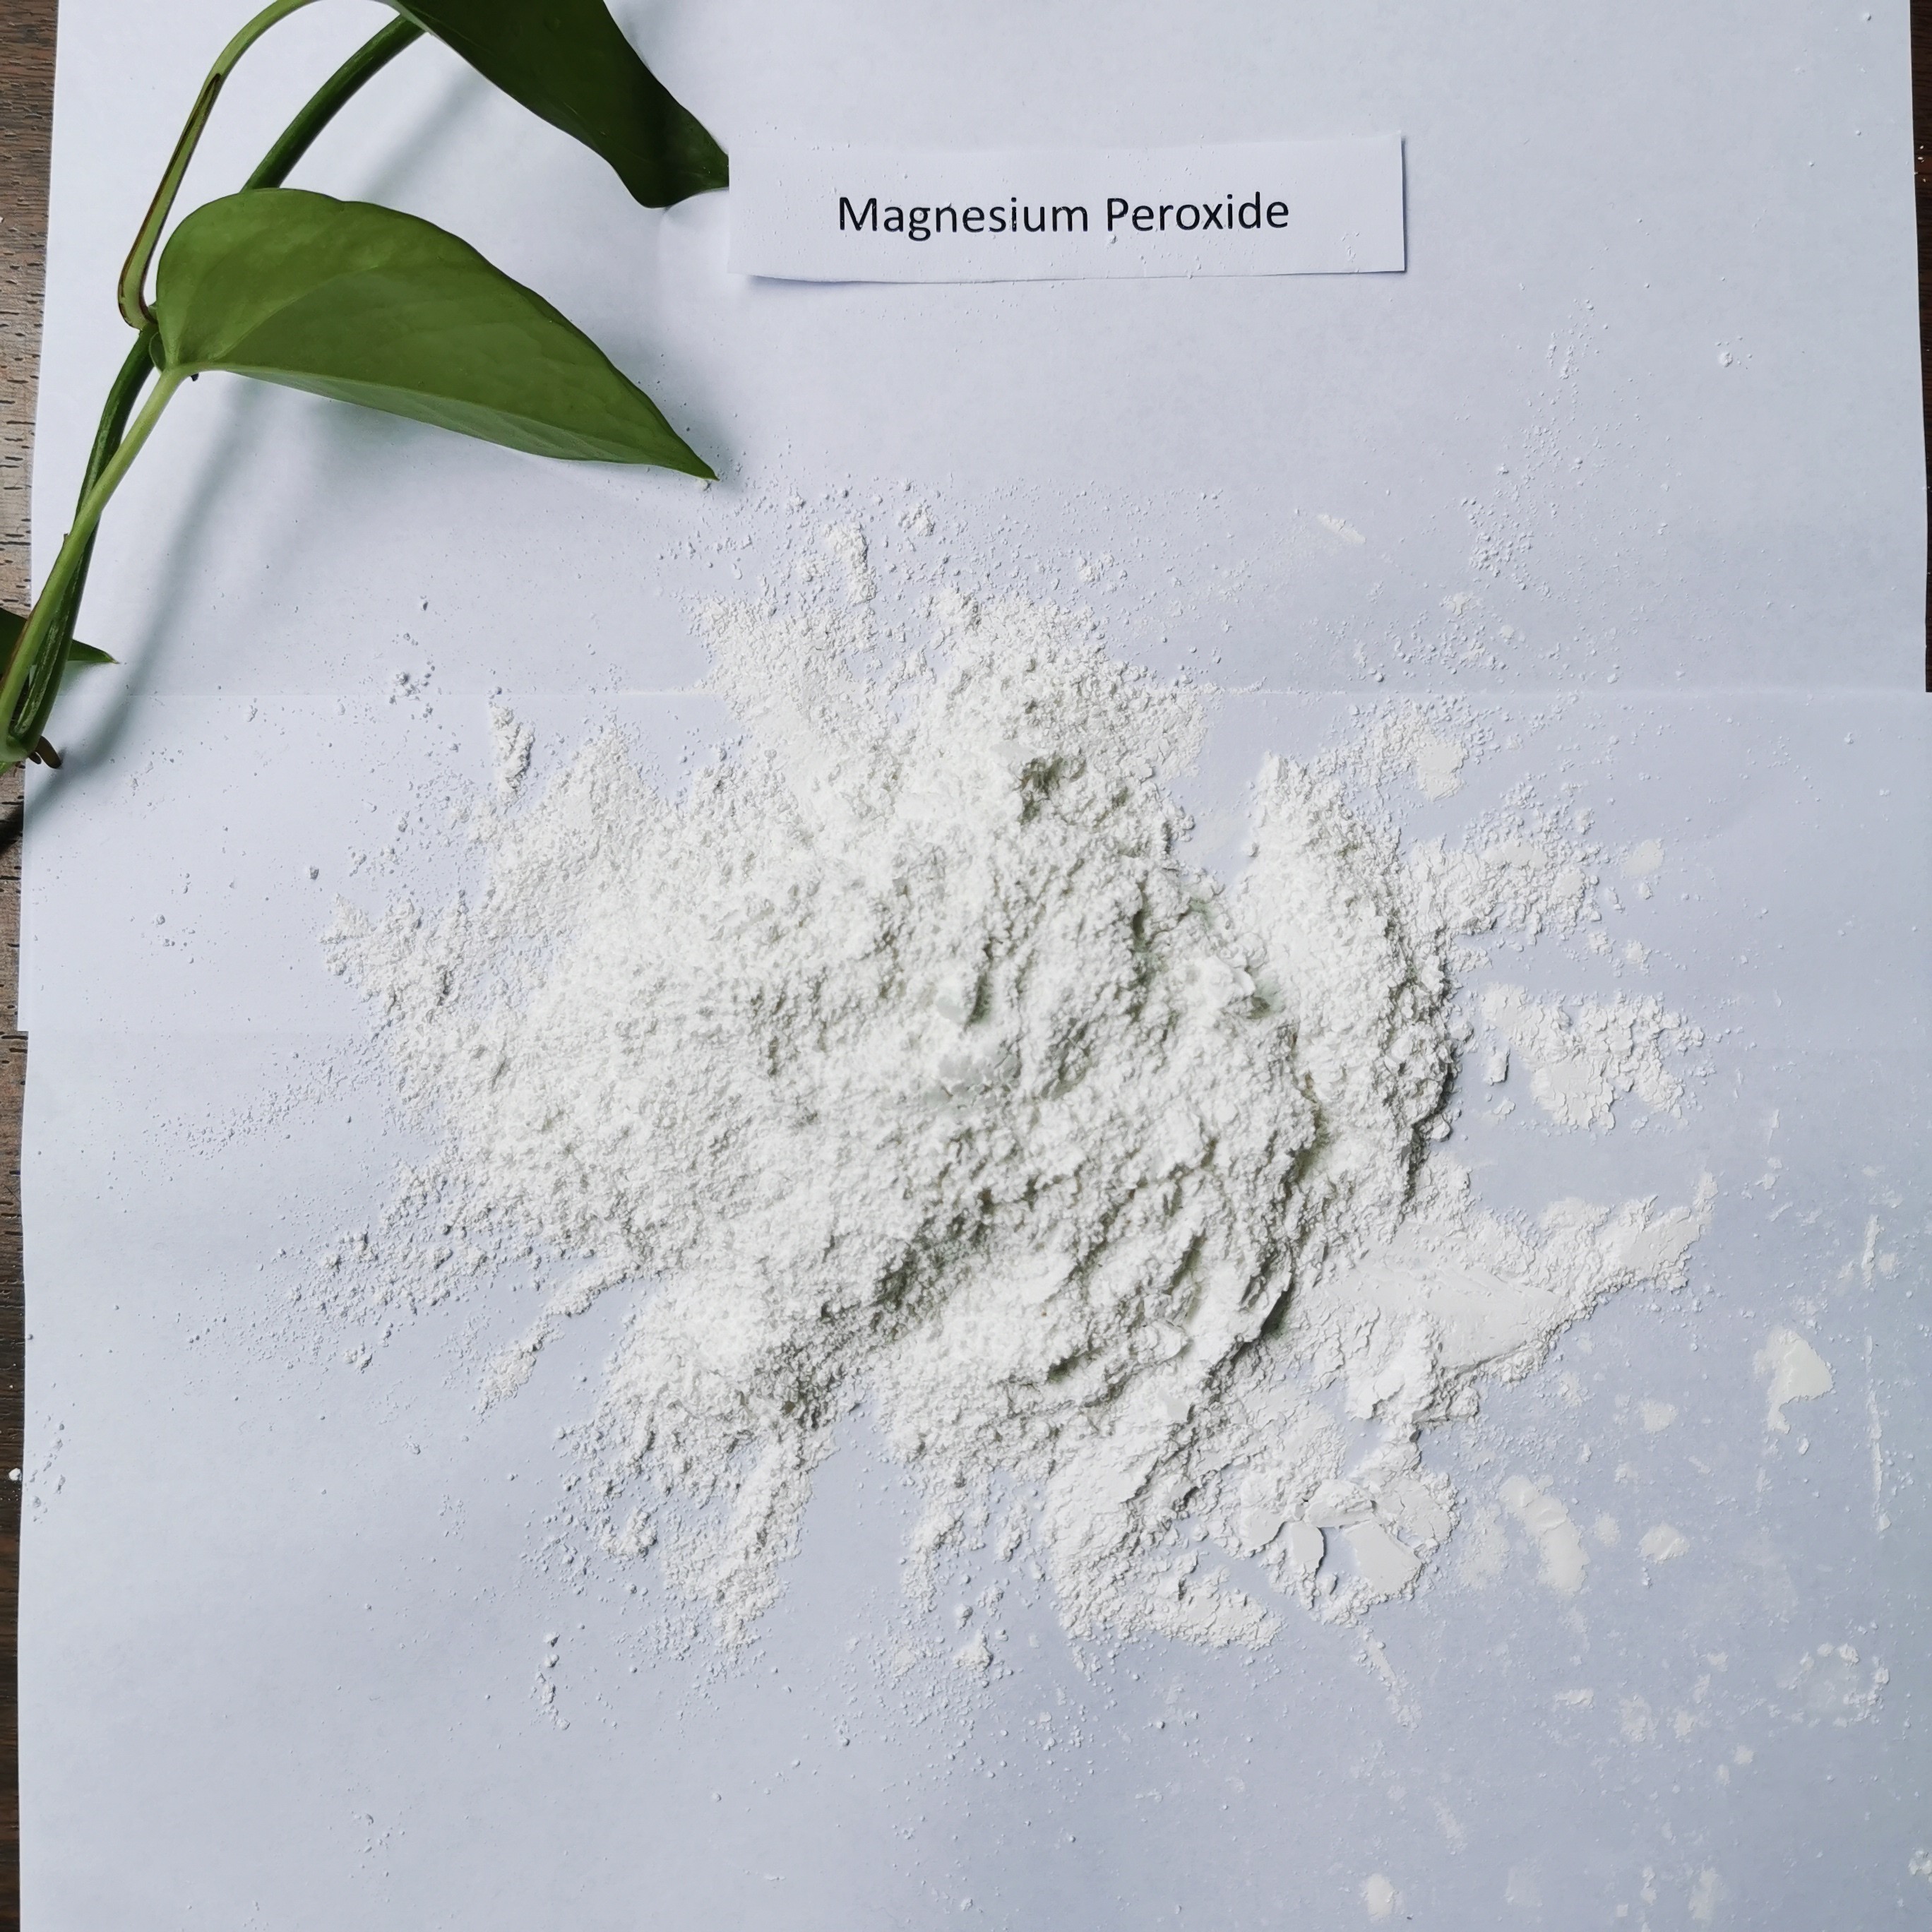 सफेद मैग्नीशियम पेरोक्साइड ऑक्सीजन पाउडर बेस्वाद अच्छा दुर्गन्ध दूर करने की क्षमता